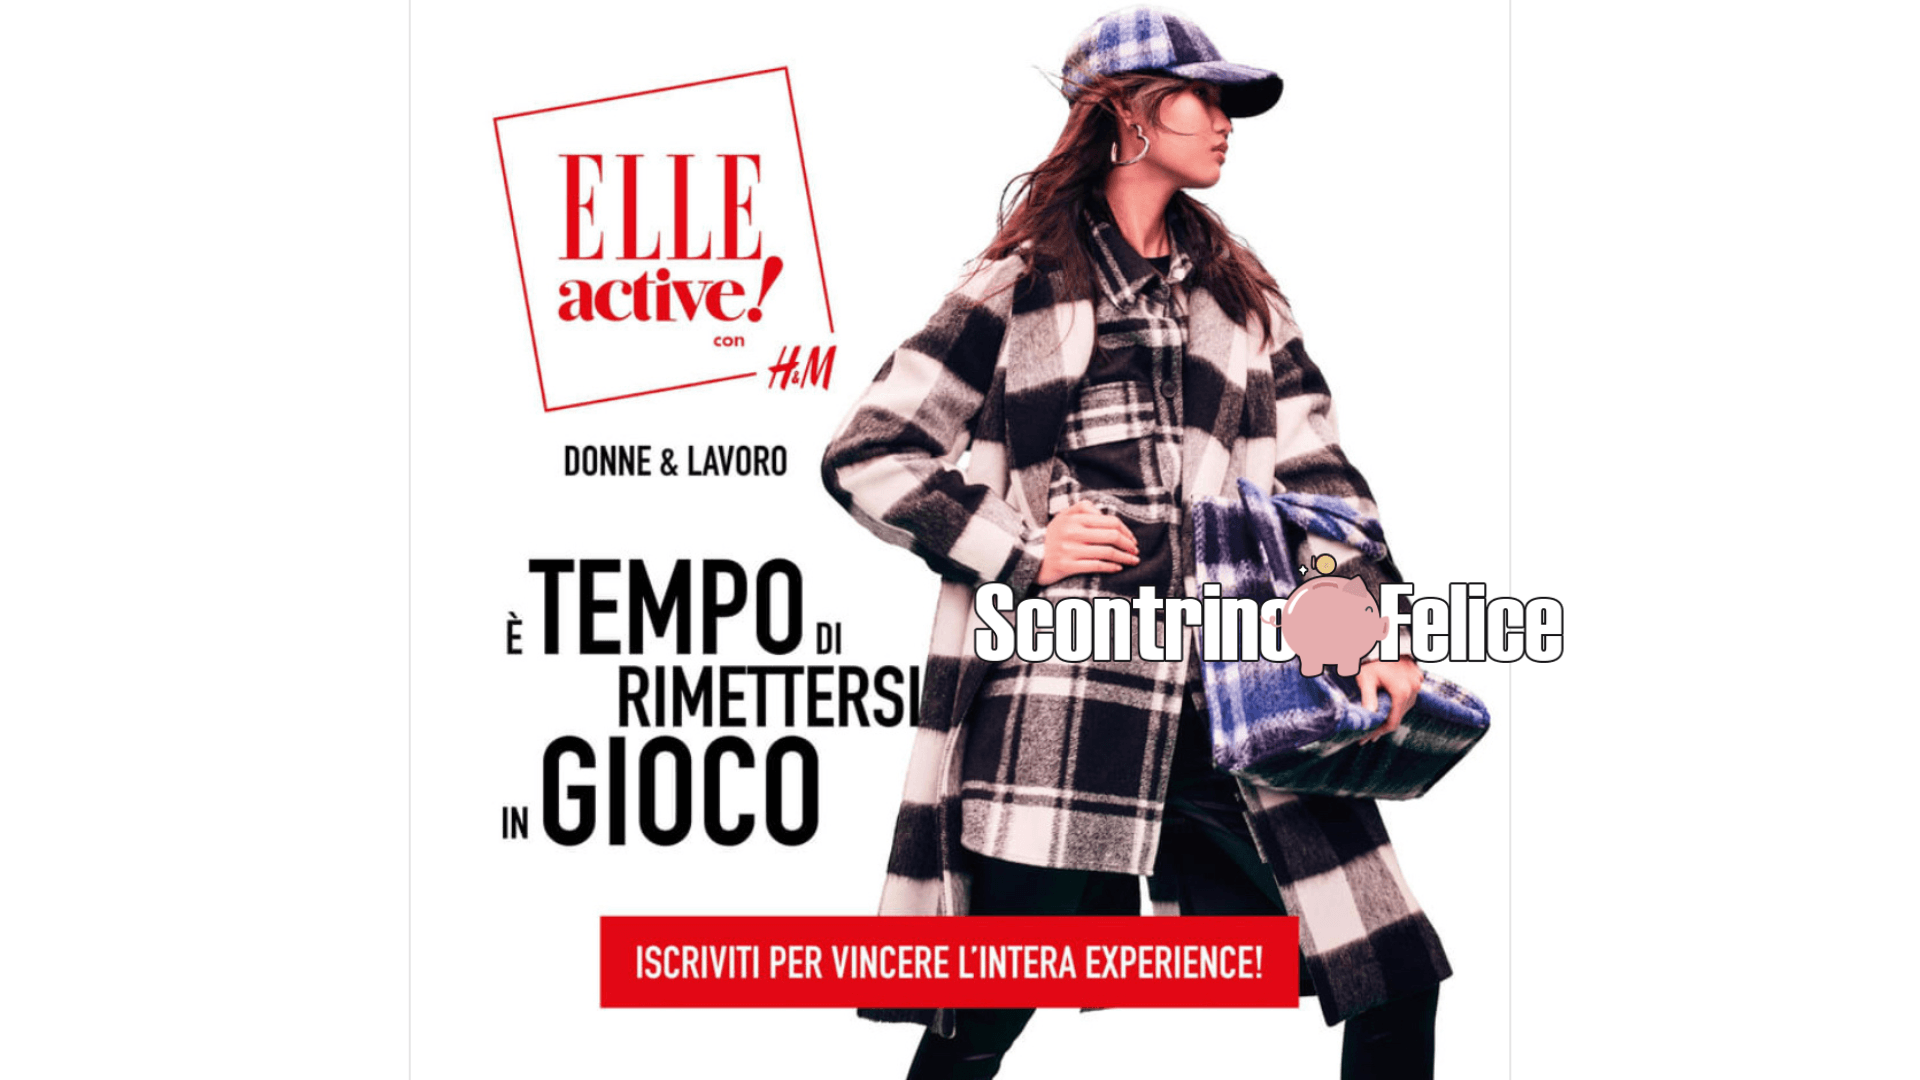 Vinci un weekend per 2 persone a Milano per partecipare a Elle active 1